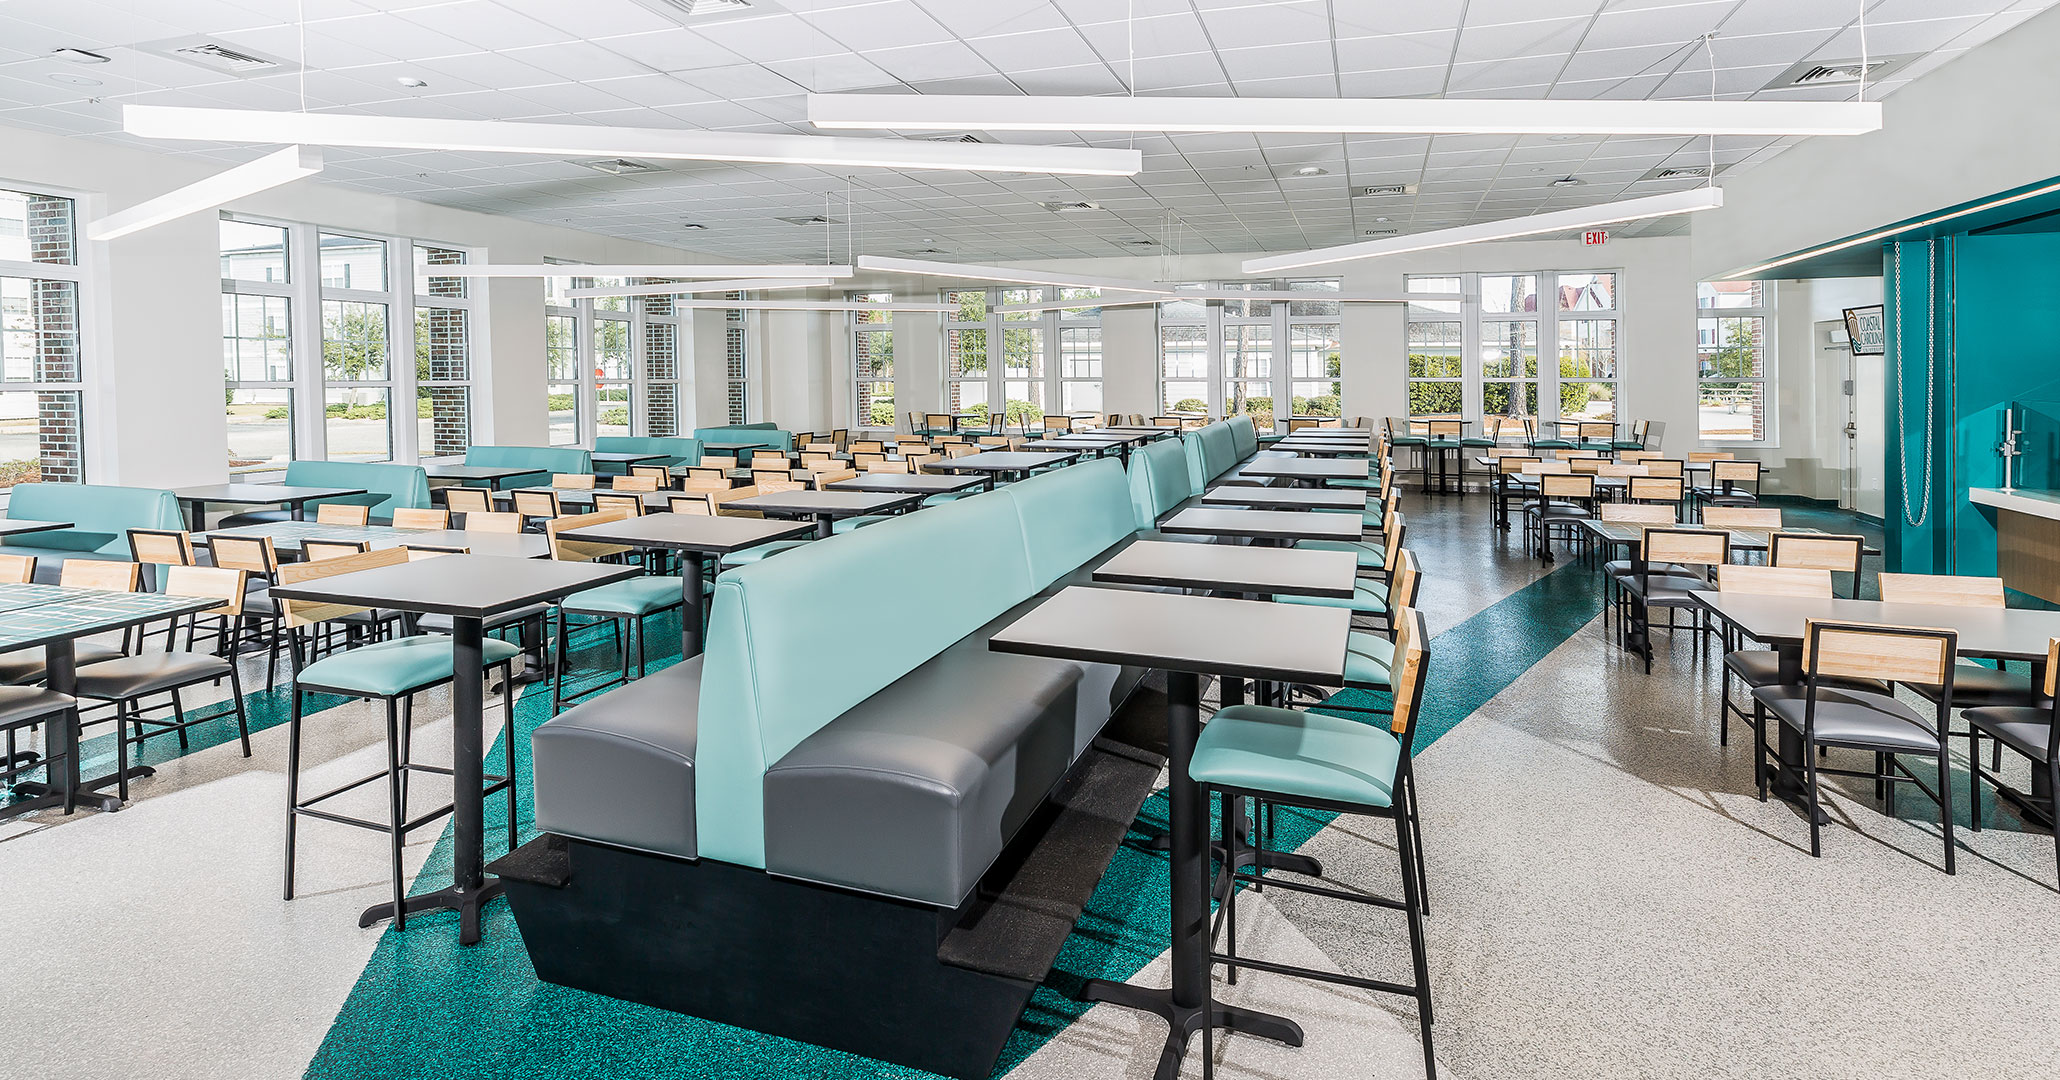 Coastal Carolina University worked with Boudreaux architects to design the a cool eating area for Coastal Carolina students.